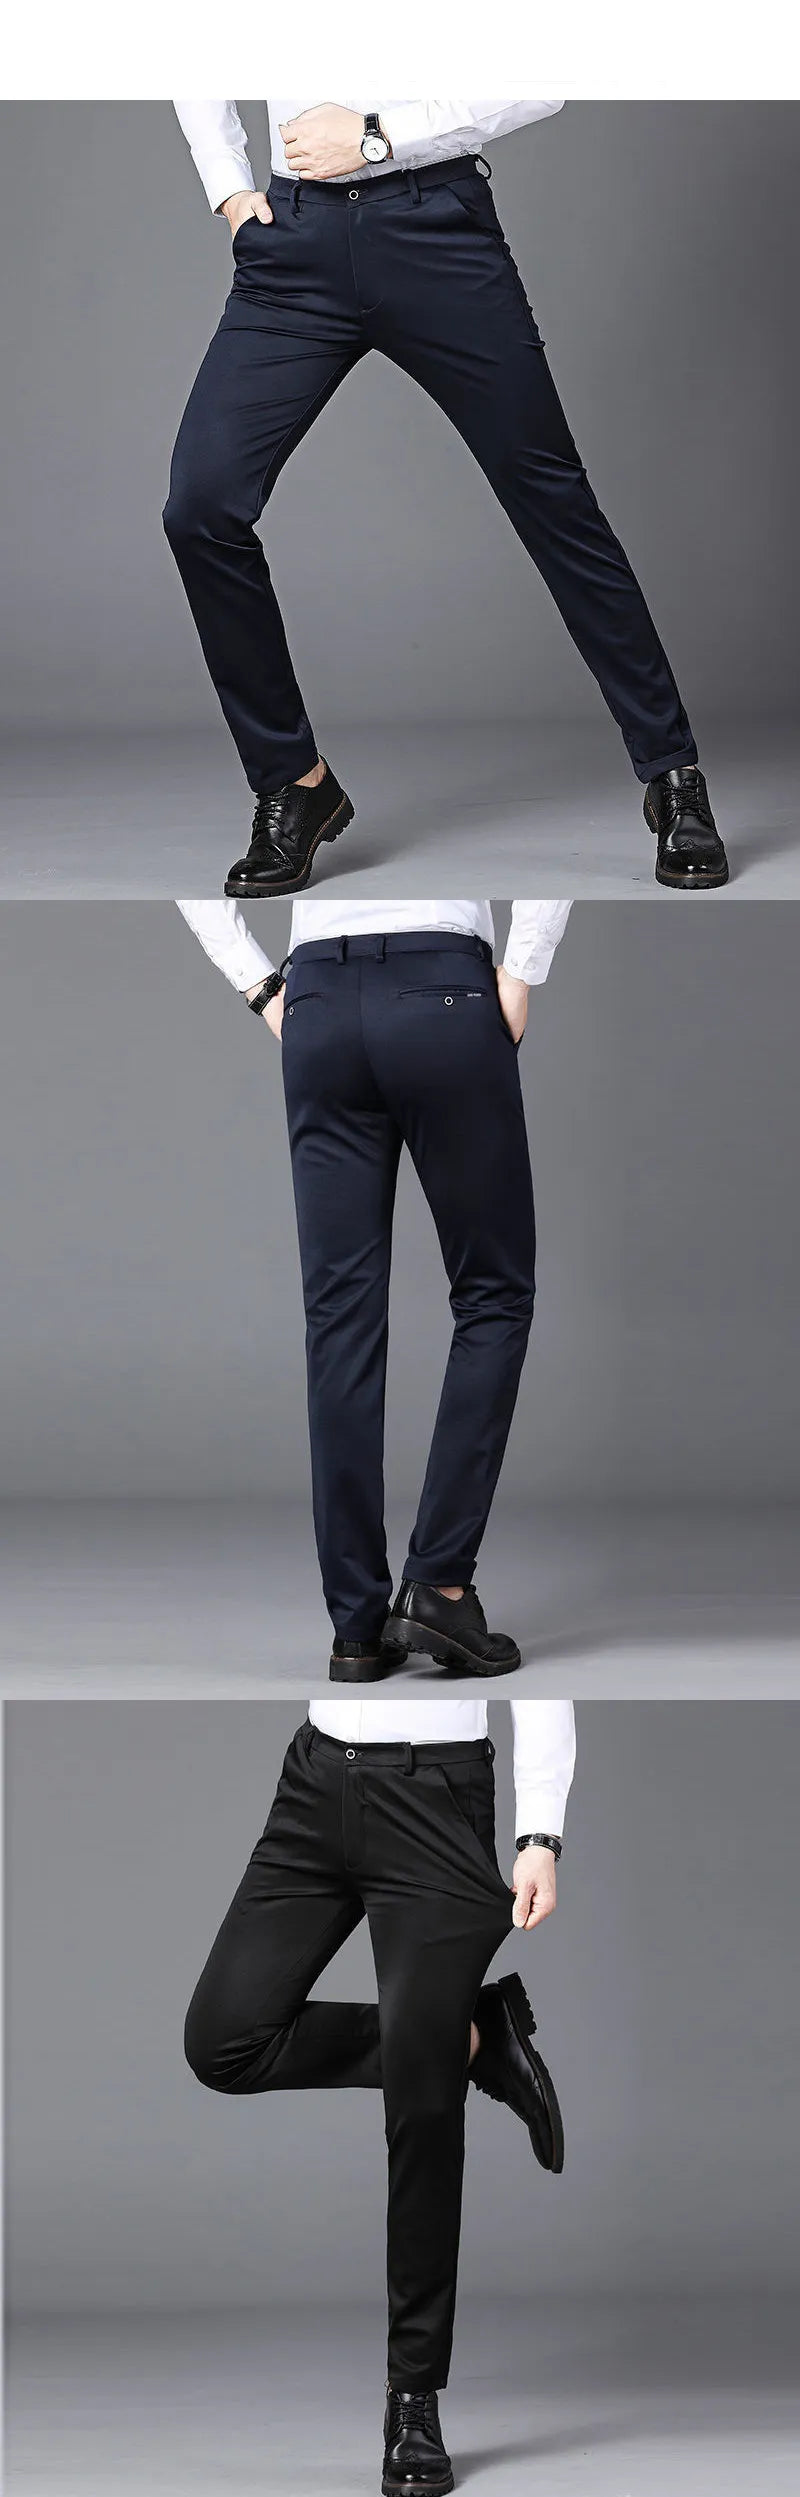 Men's Spring Autumn Fashion Business Casual Long Pants Suit Pants Male Elastic Straight Formal Trousers Plus Big Size 28-40 - Sellinashop